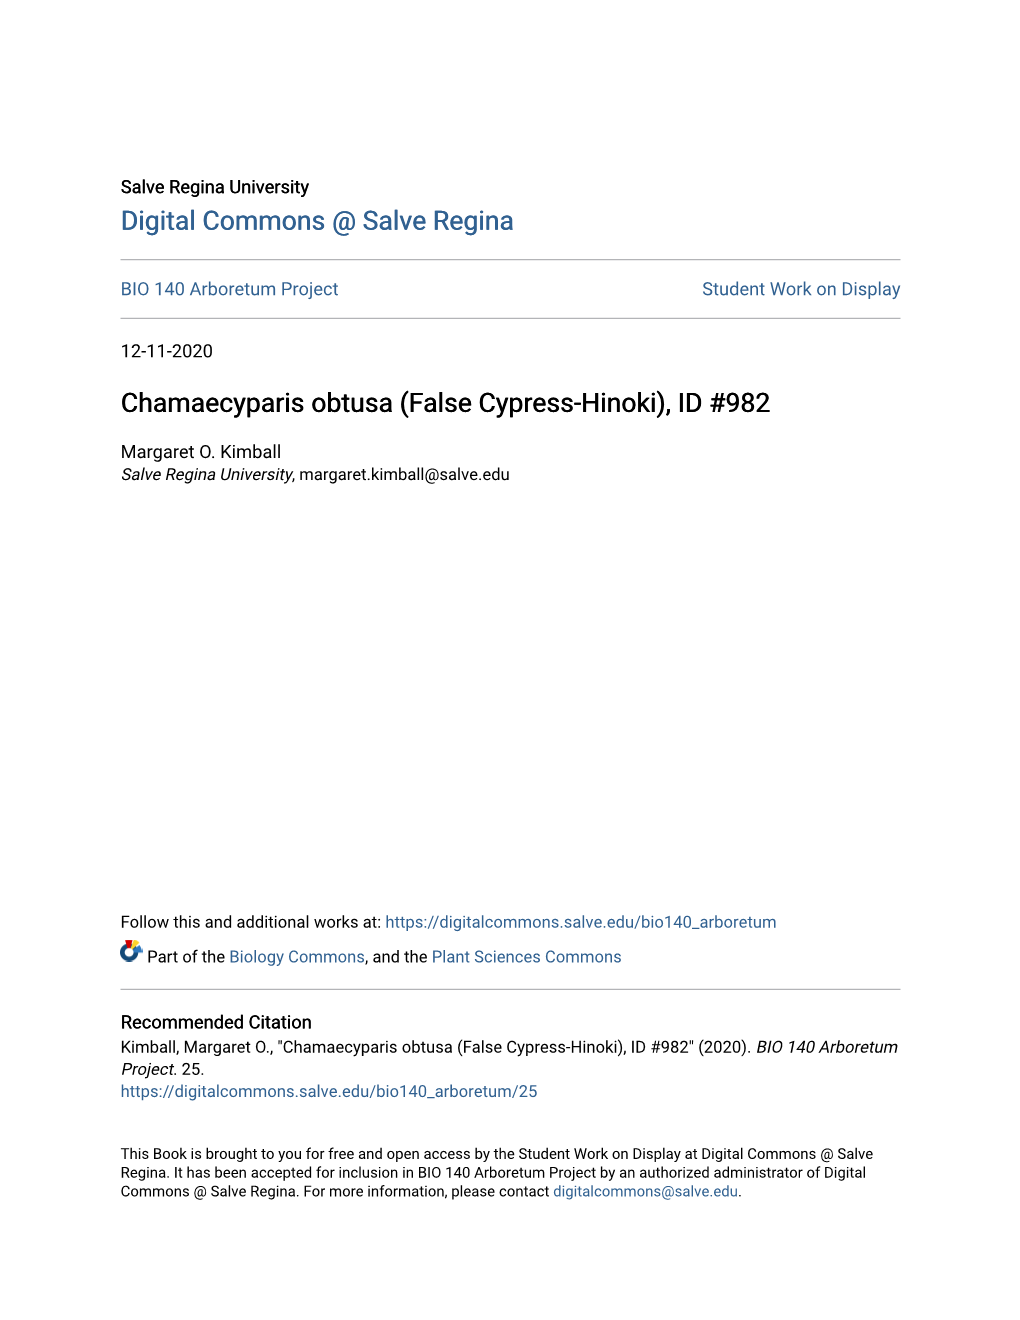 Chamaecyparis Obtusa (False Cypress-Hinoki), ID #982